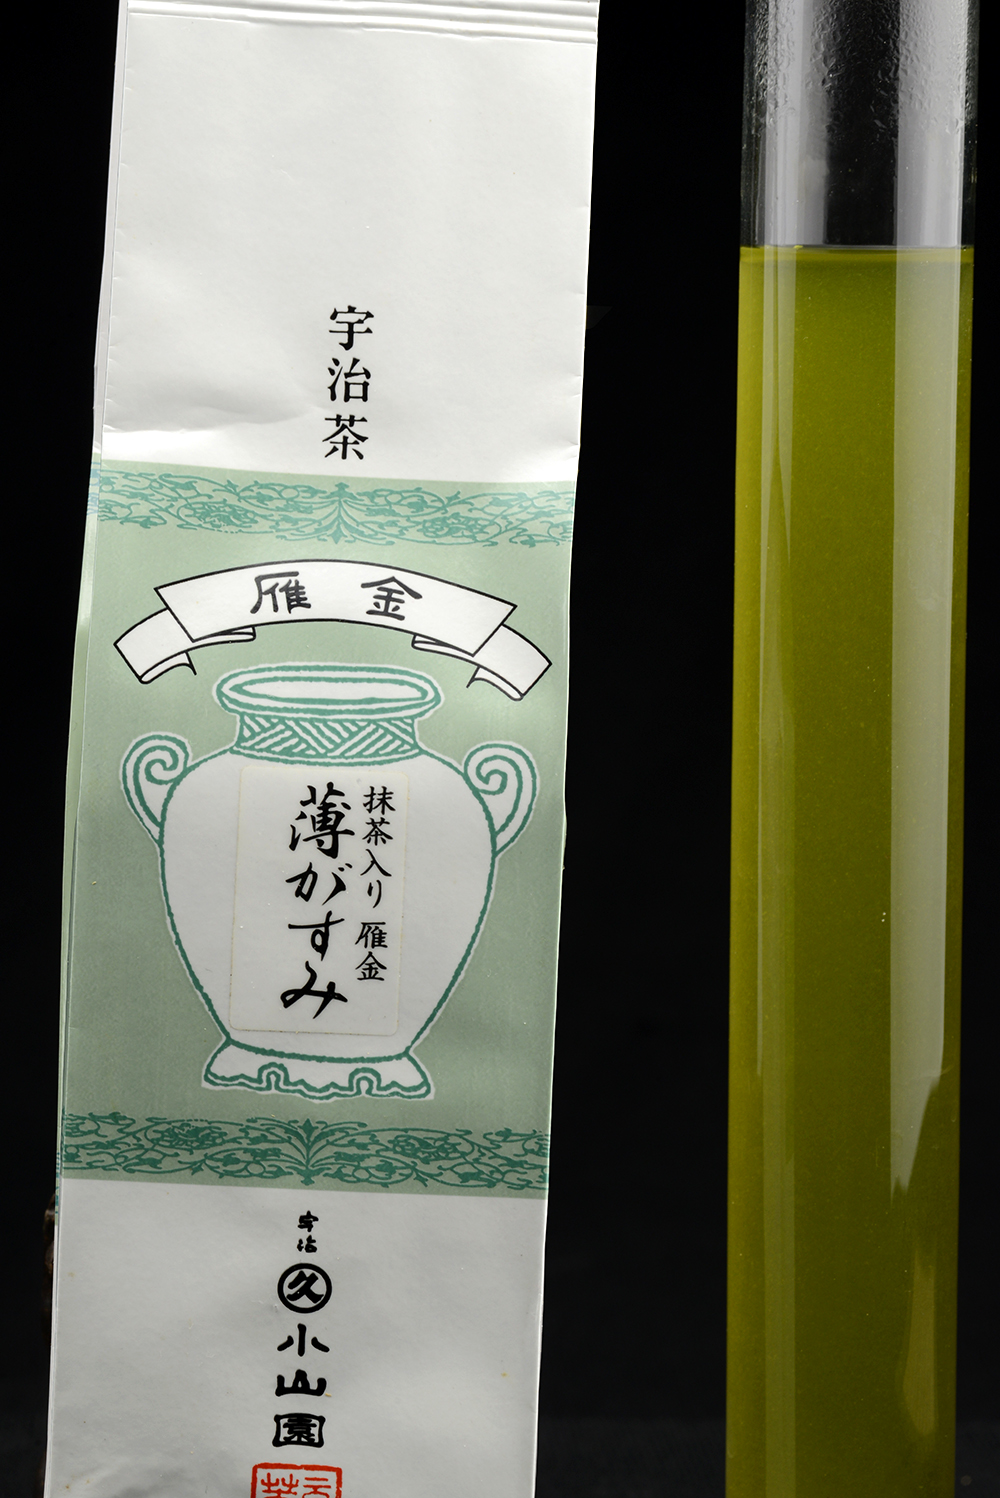 marukyu-koyamaen karigane usugasumi japanese green tea